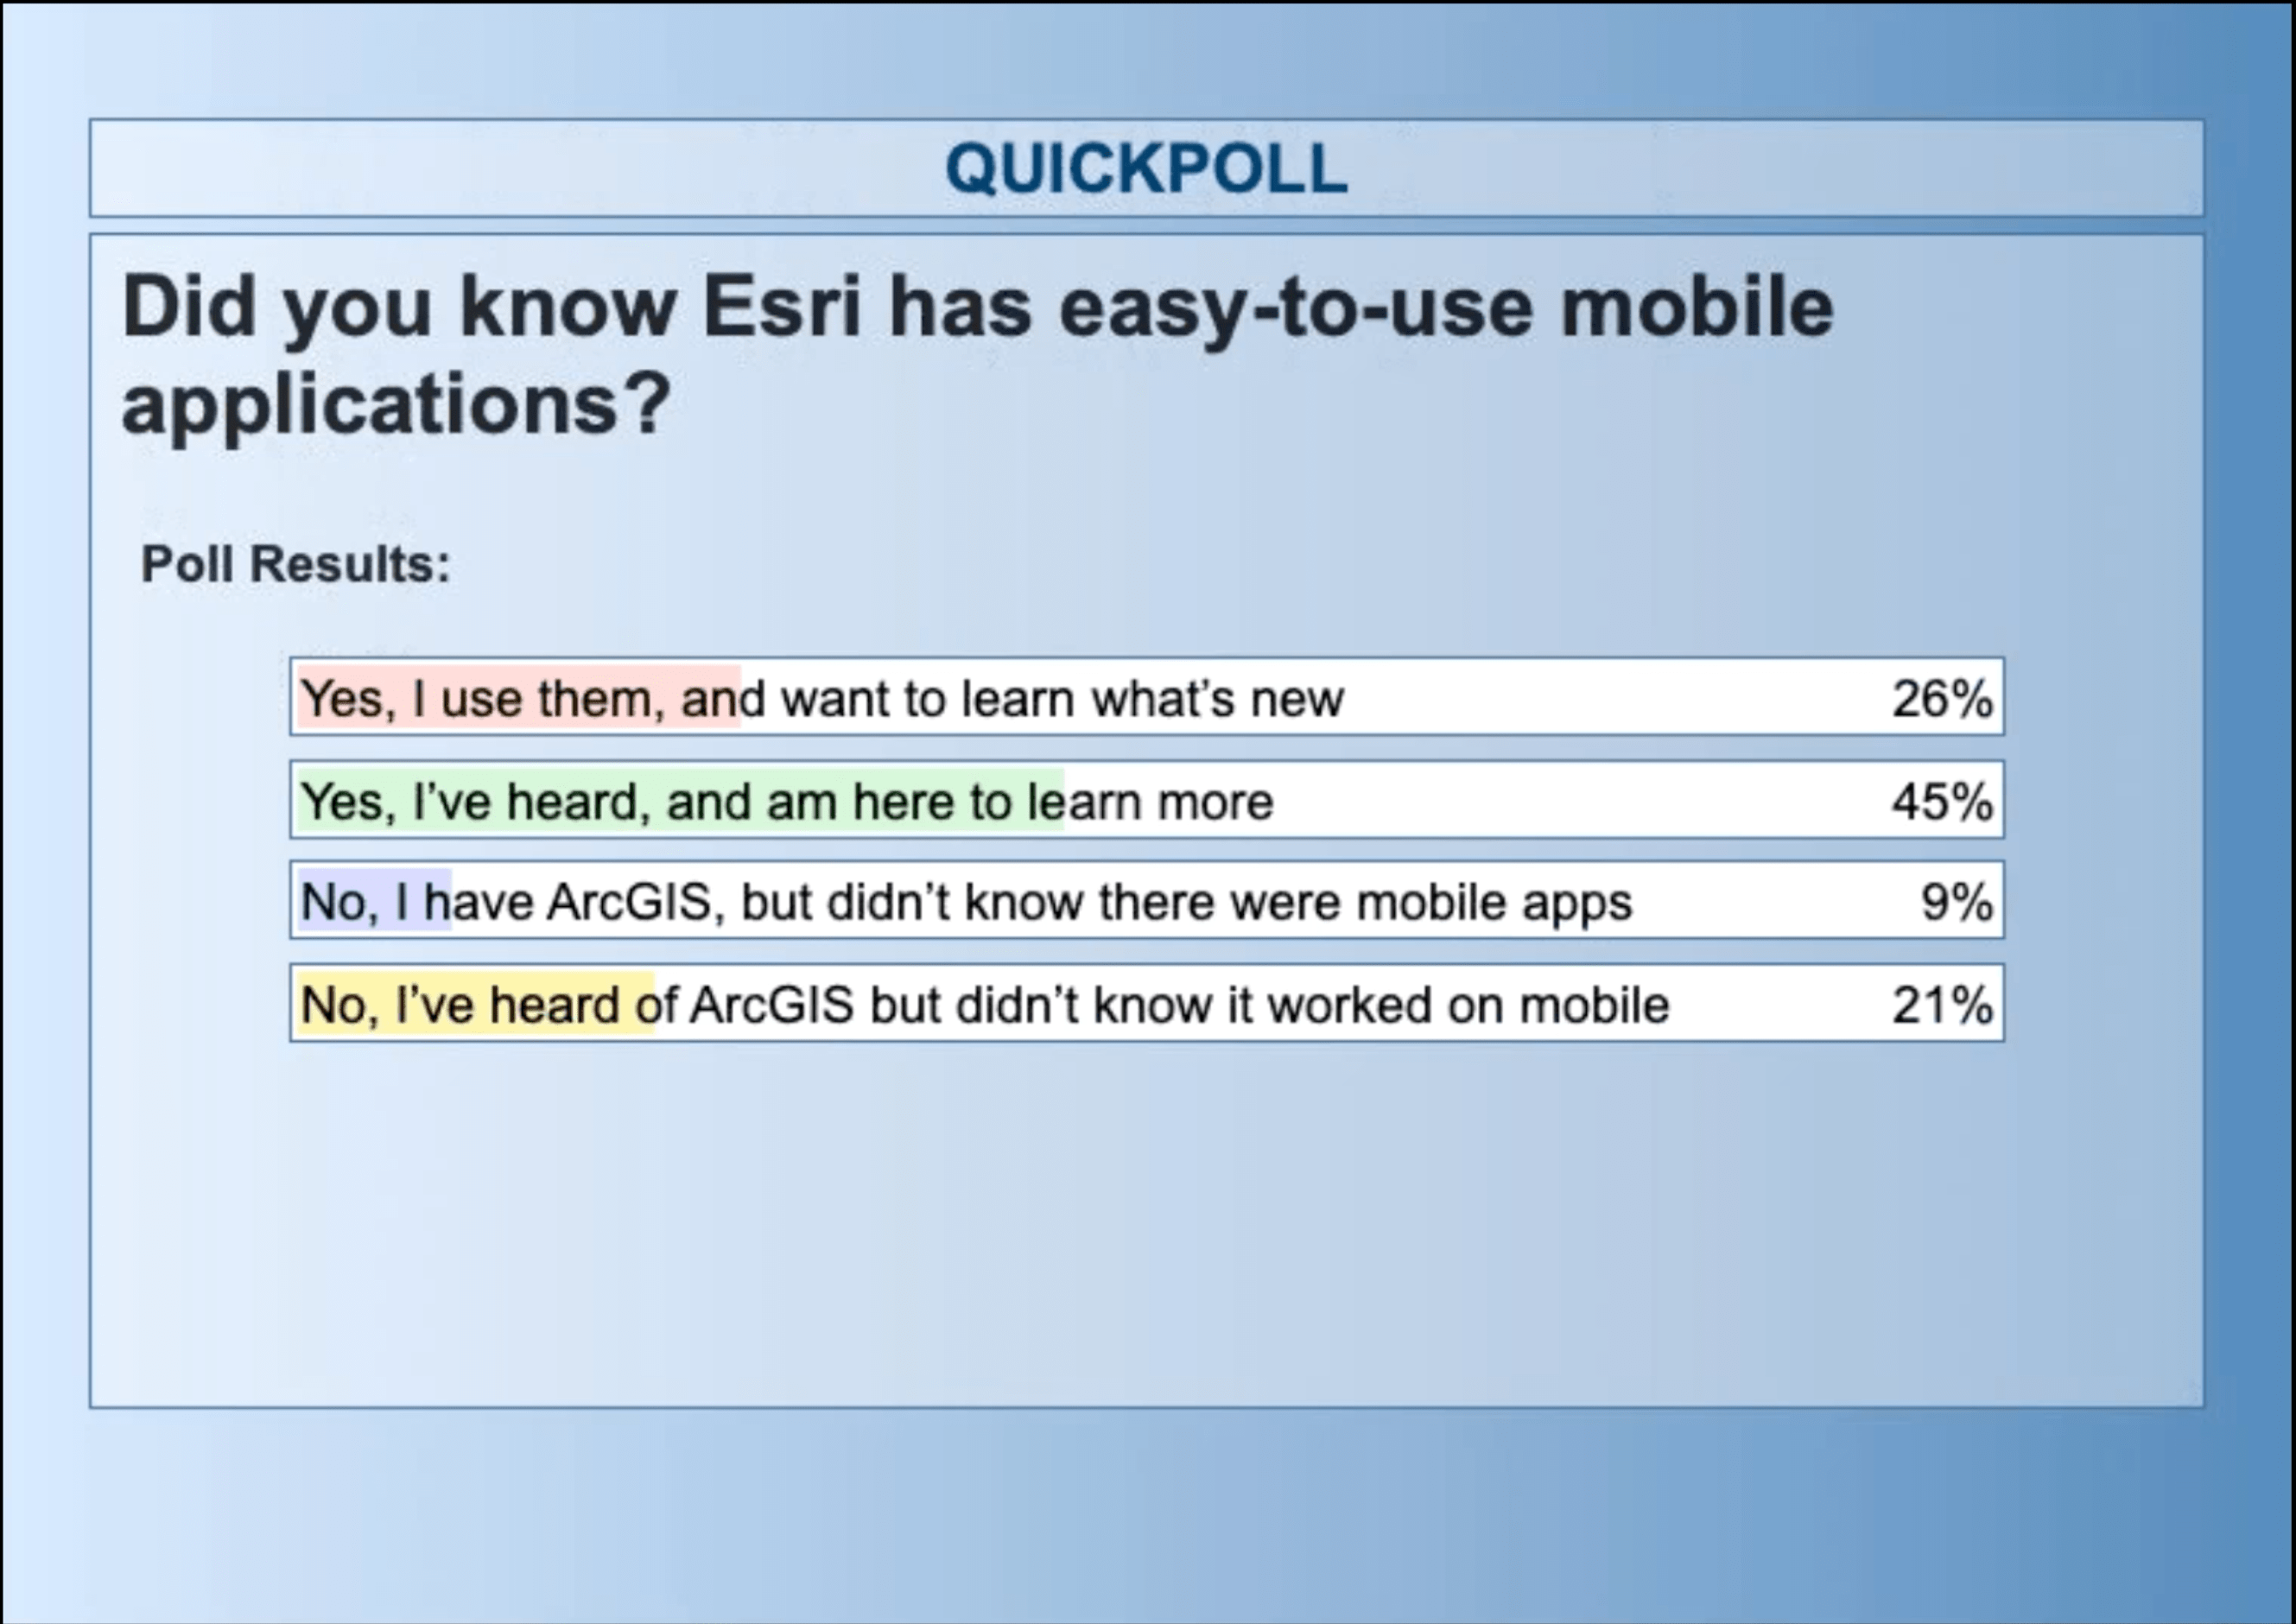 NRWA Eos Webinar Poll: "Did you know Esri has easy-to-use mobile applications?"